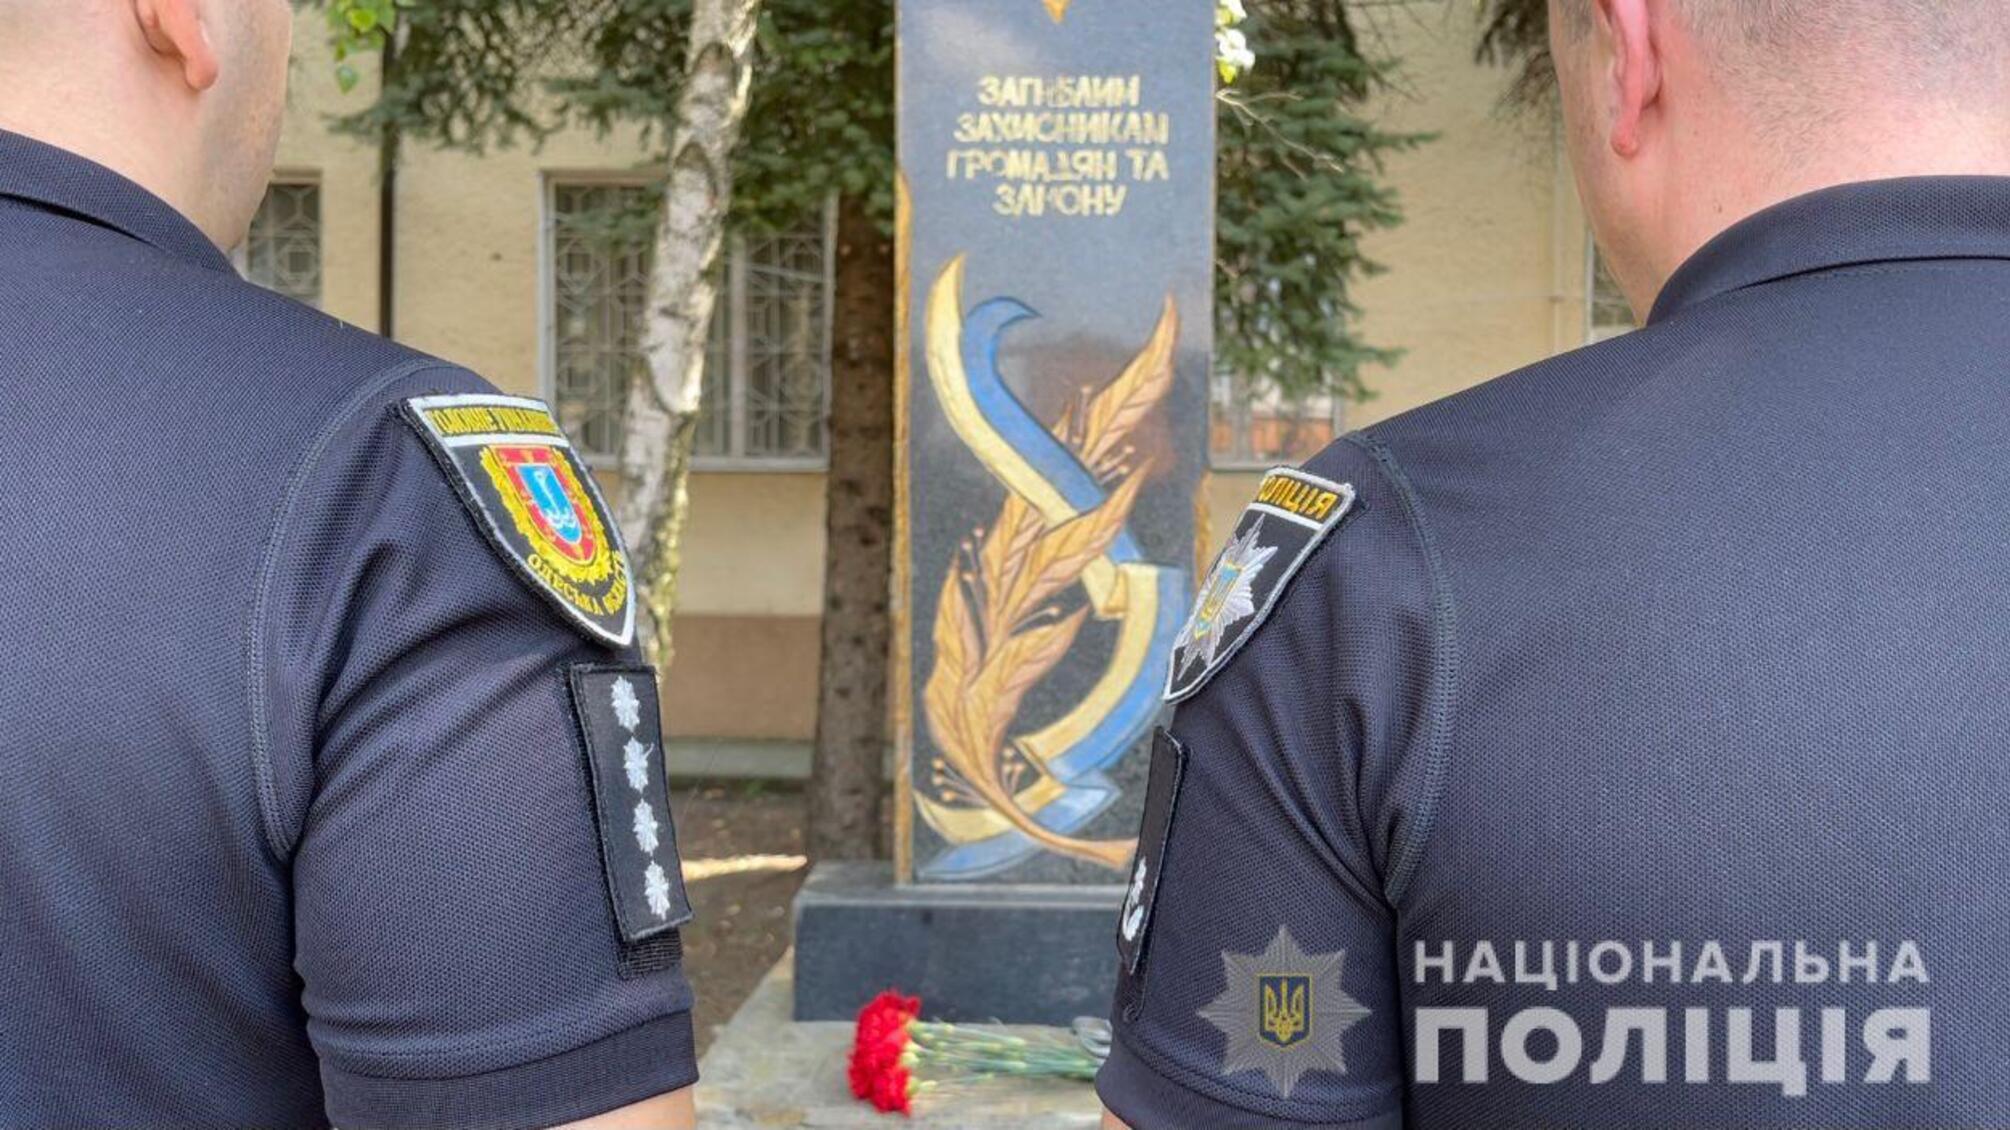 Правоохоронці Одещини вшановують загиблих колег